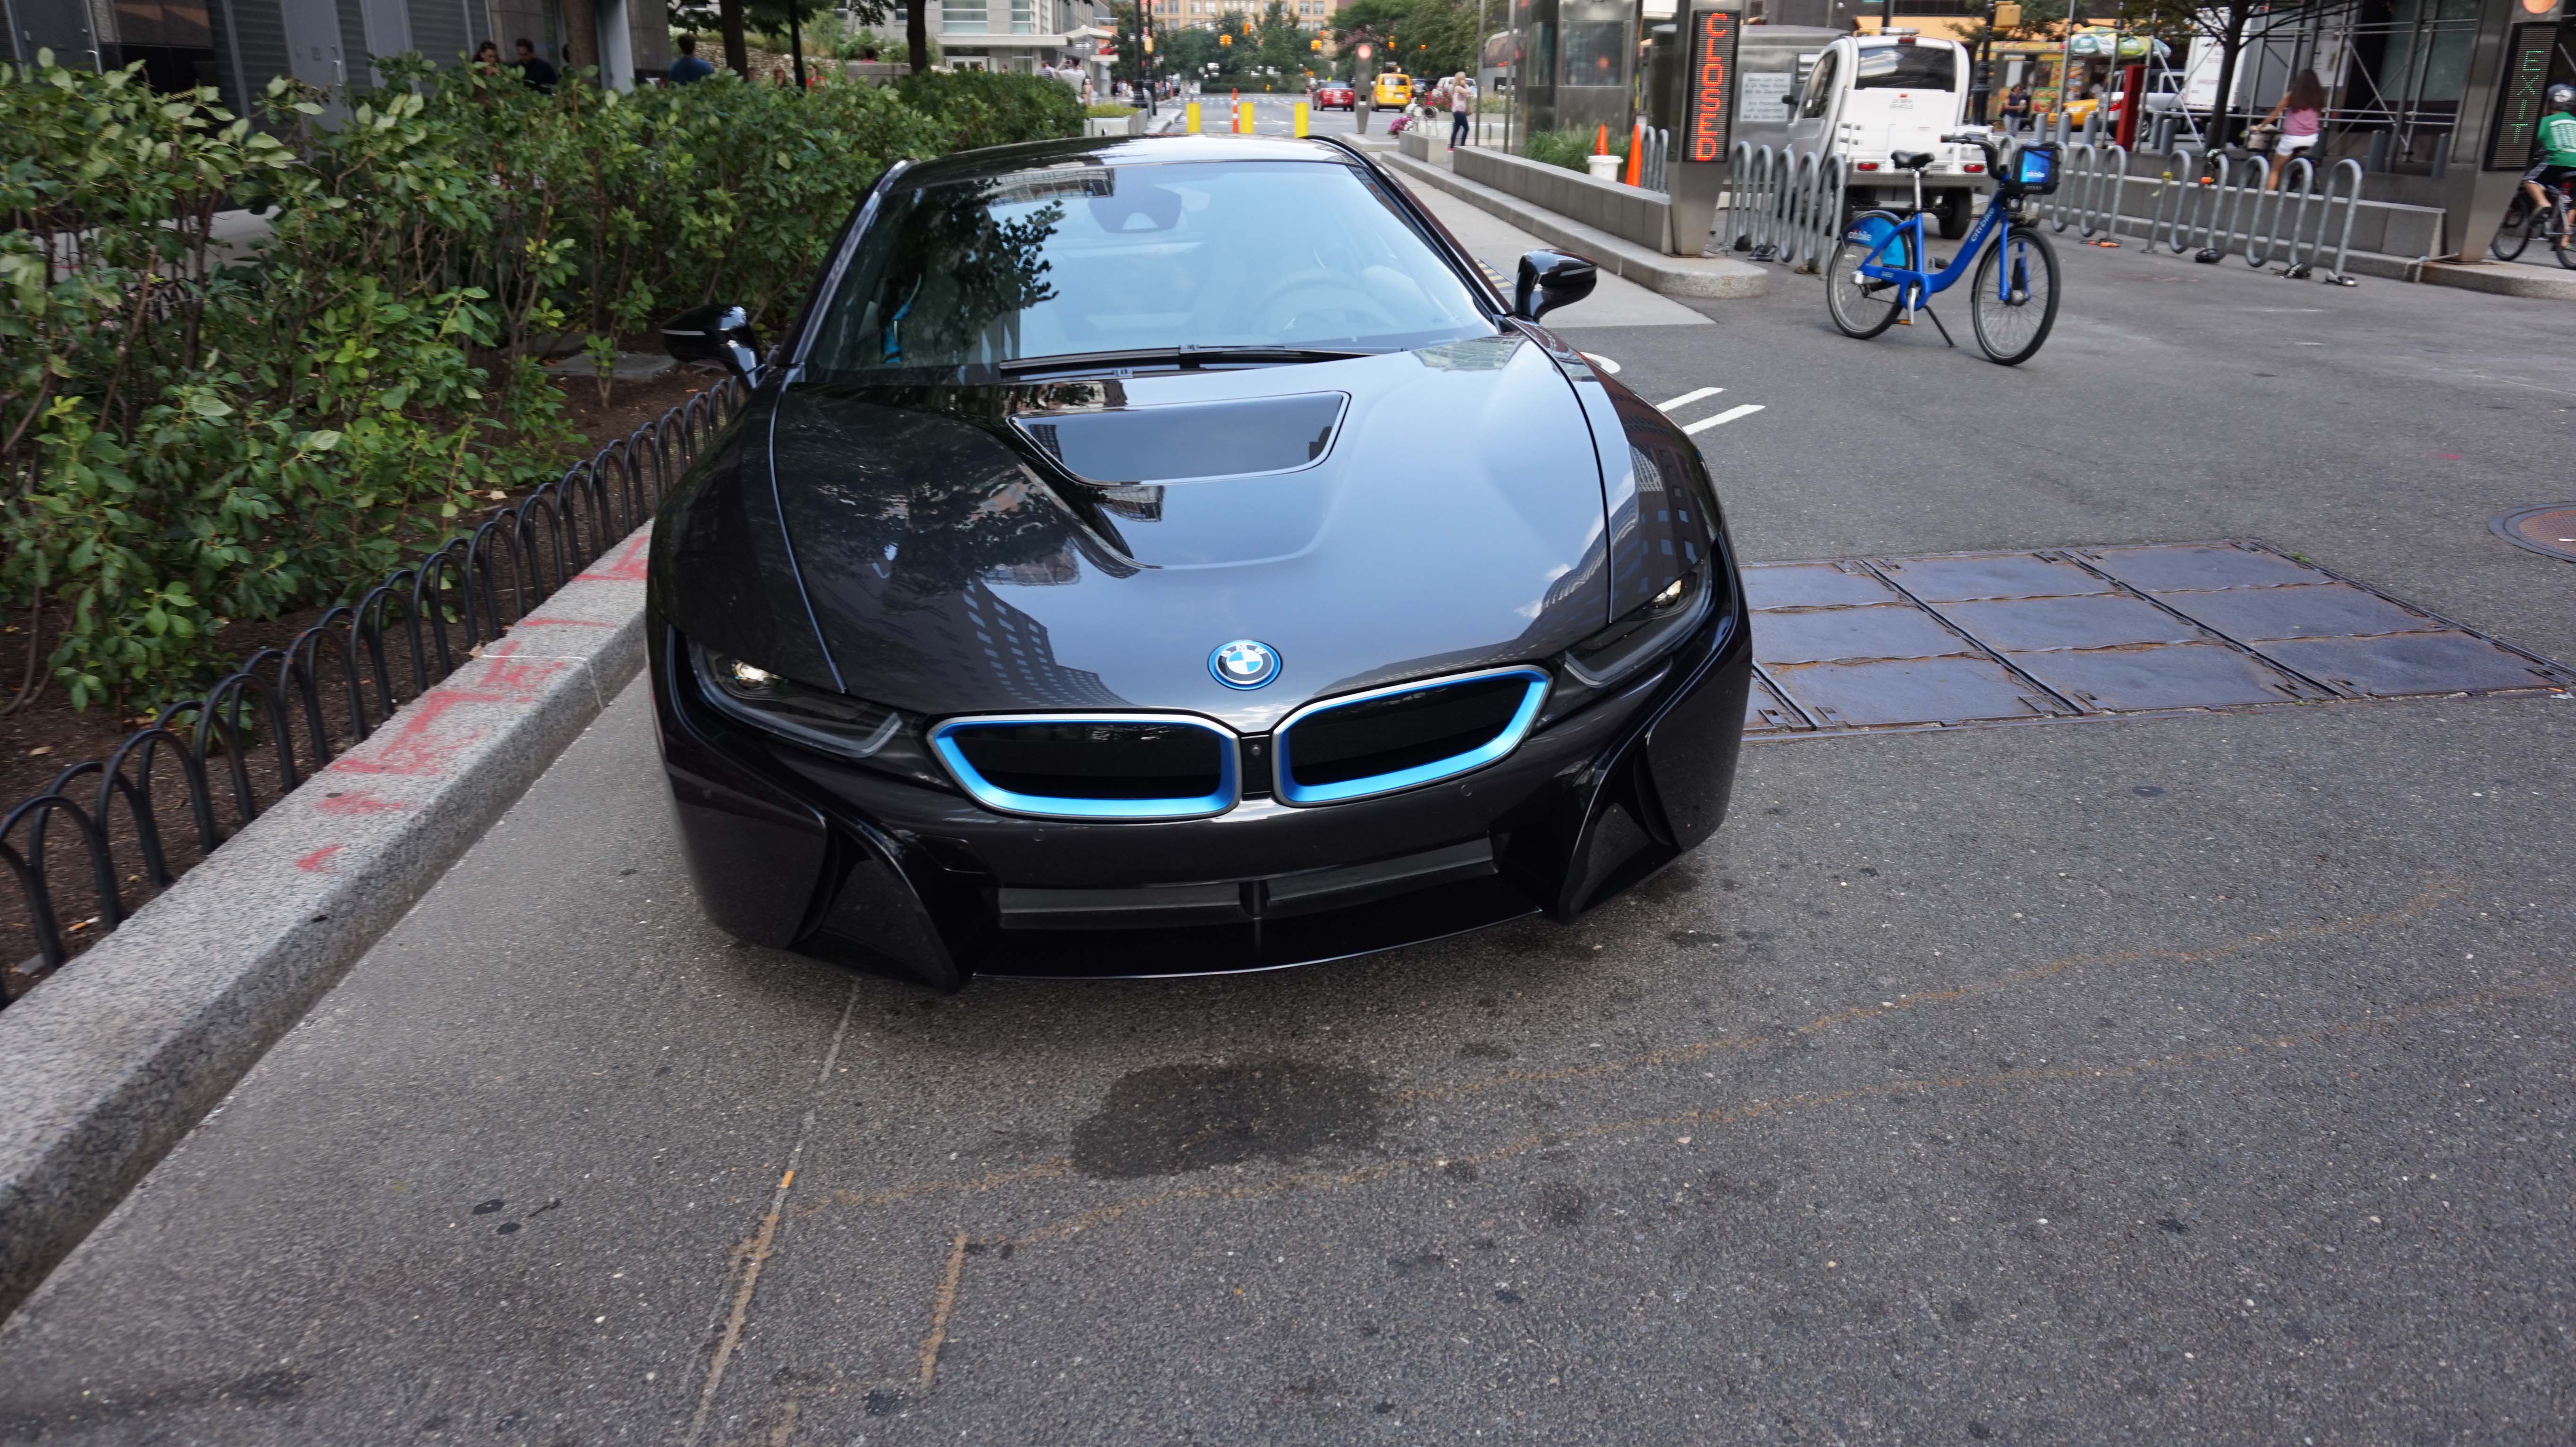 BMW M8 front